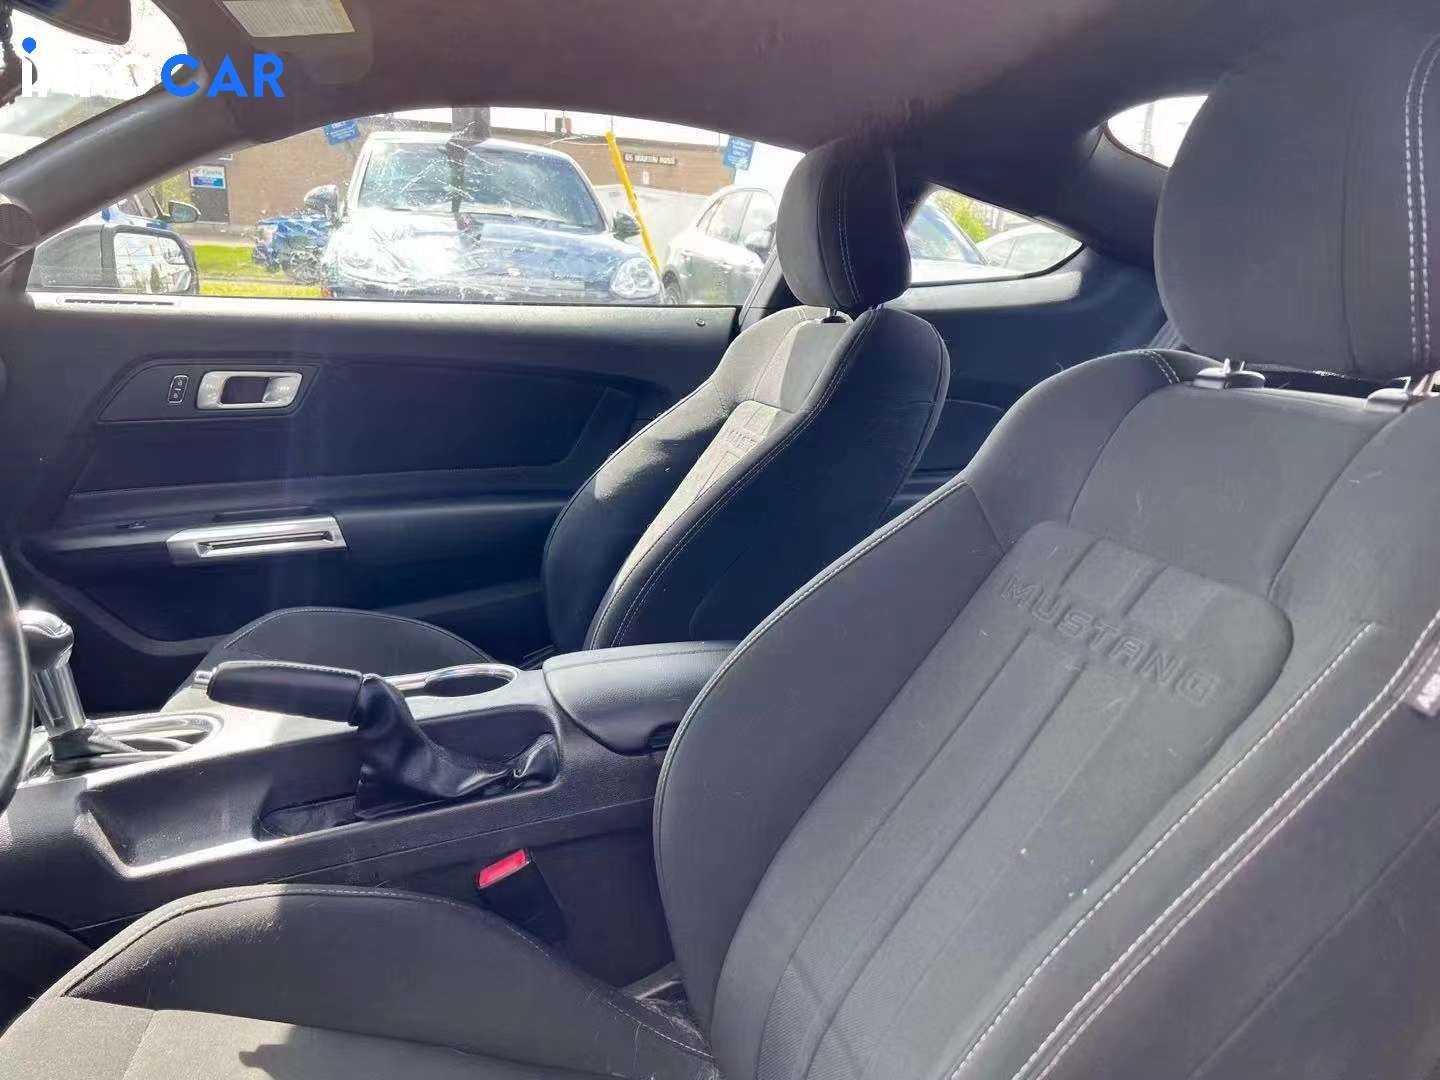 2019 Ford Mustang GT - INFOCAR - Toronto Auto Trading Platform